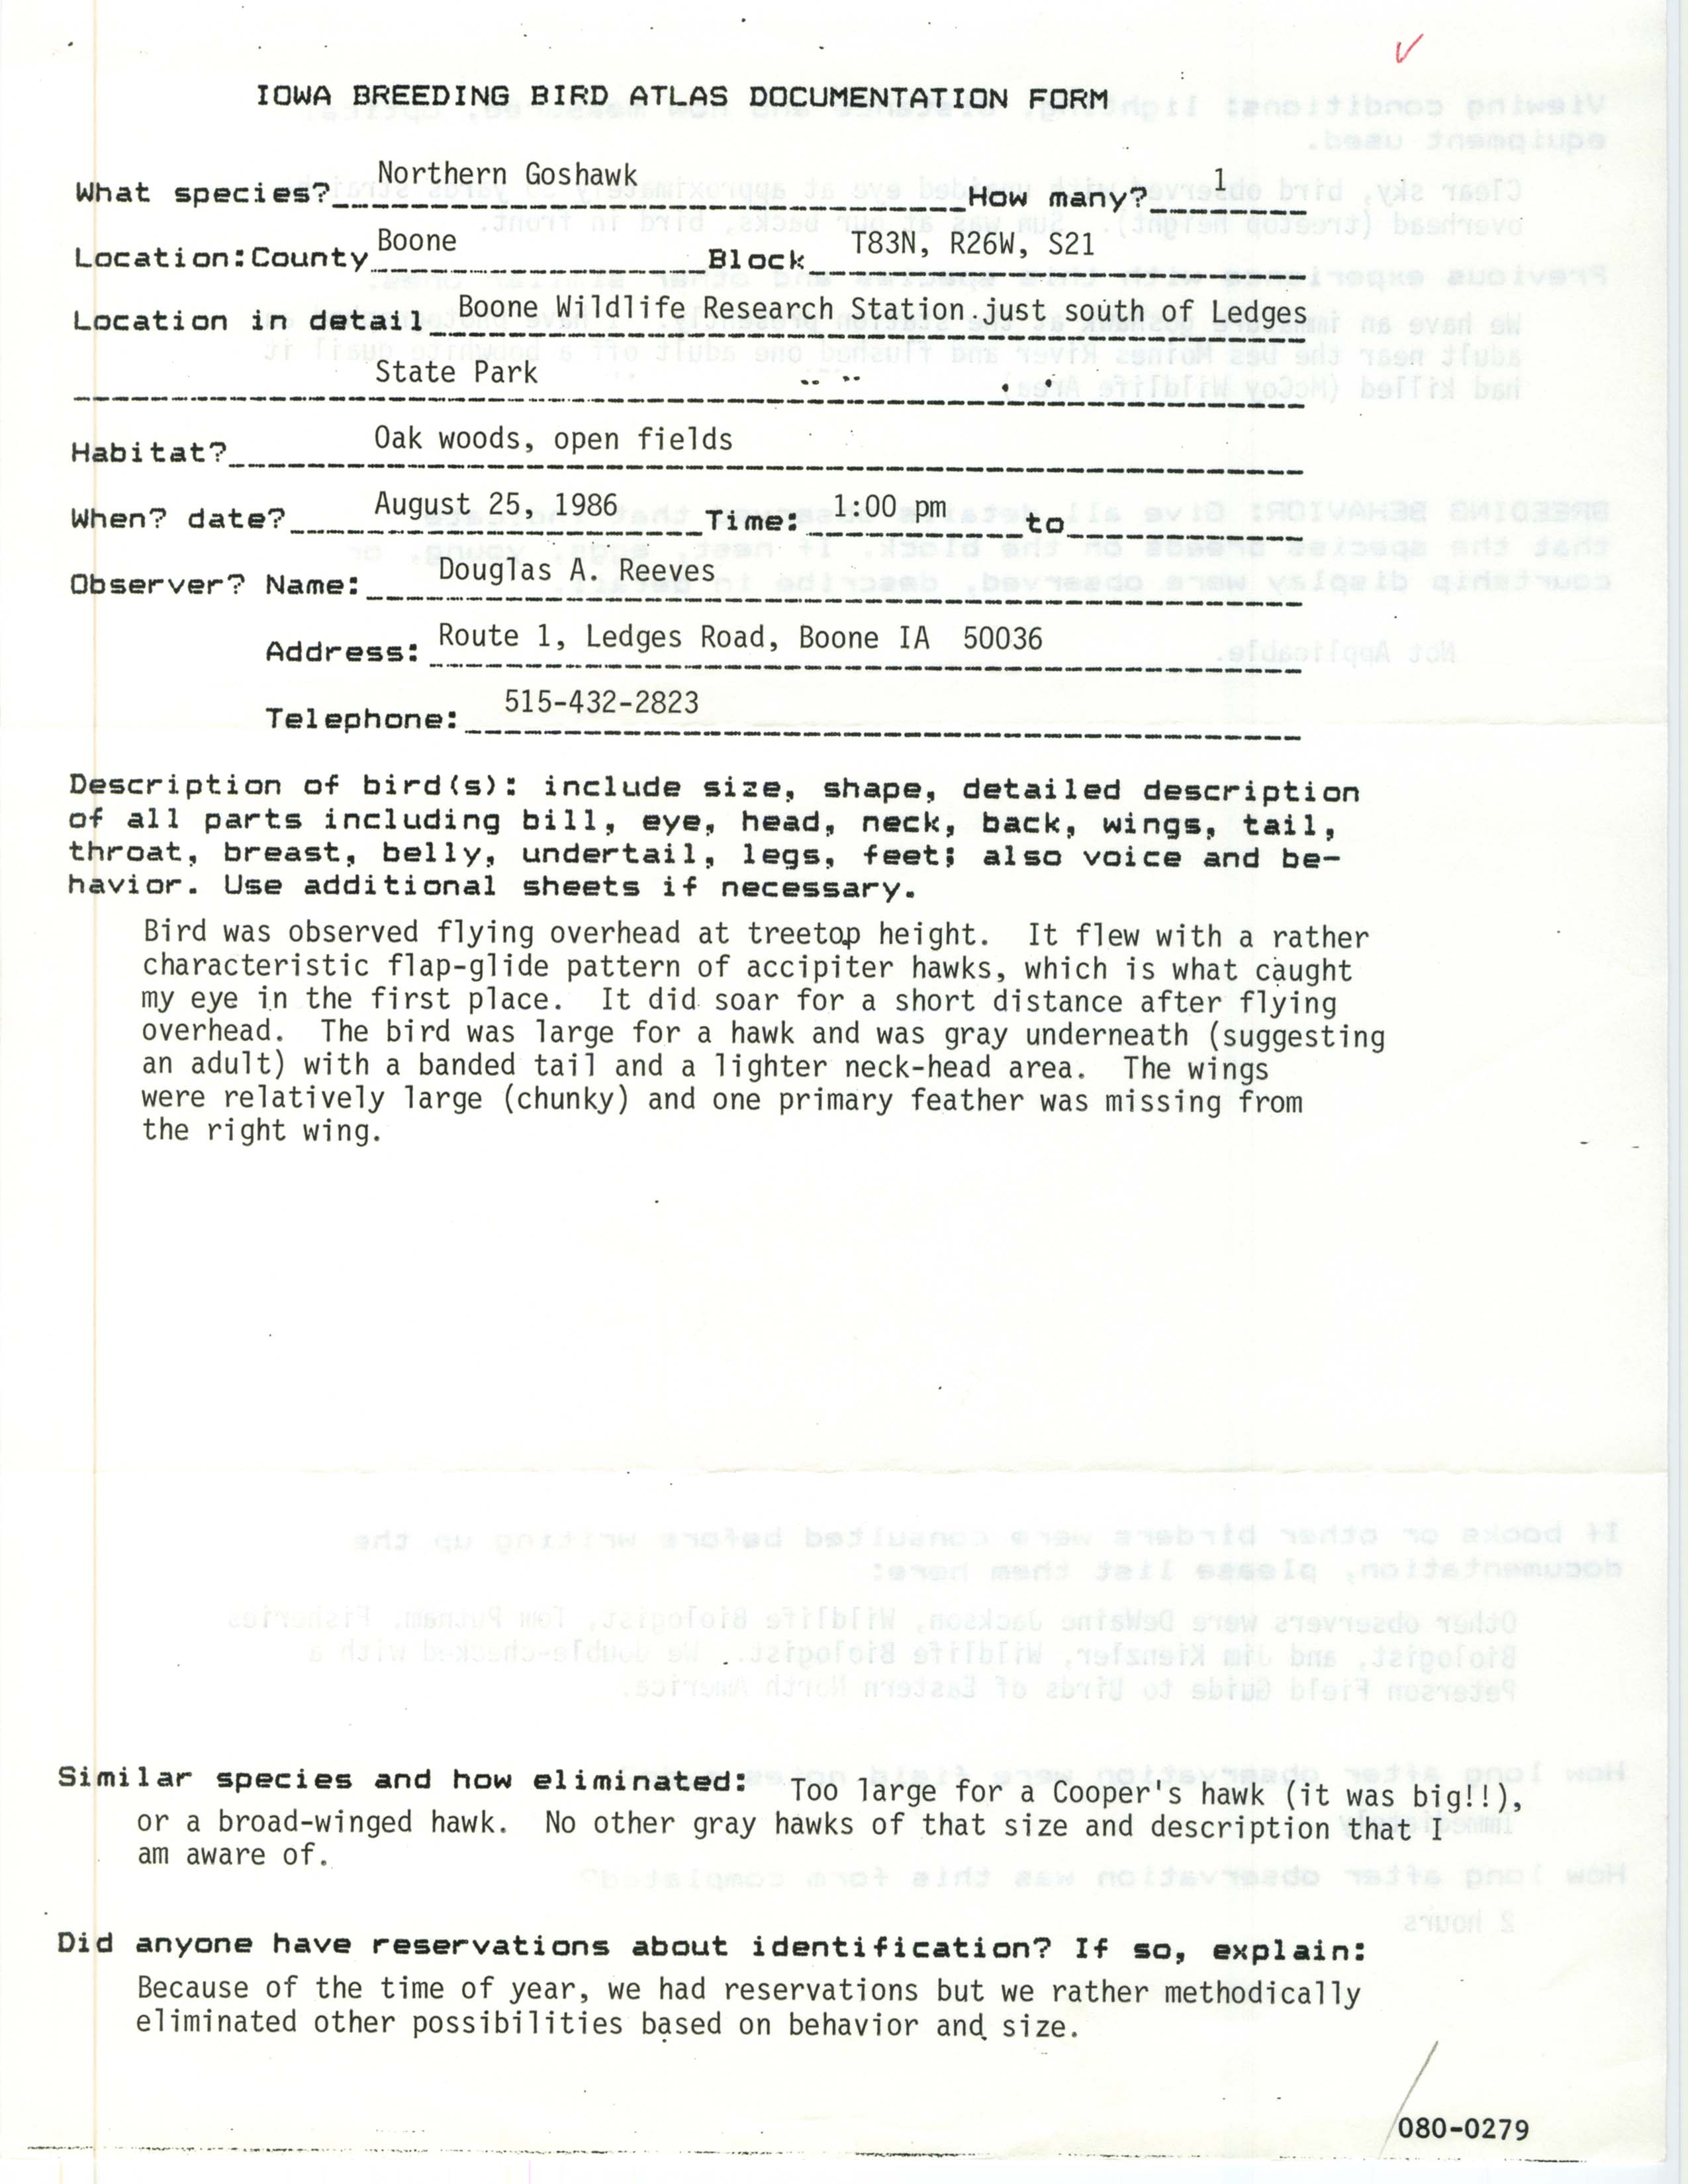 Rare bird documentation form for Northern Goshawk at Boone Wildlife Research Station, 1986